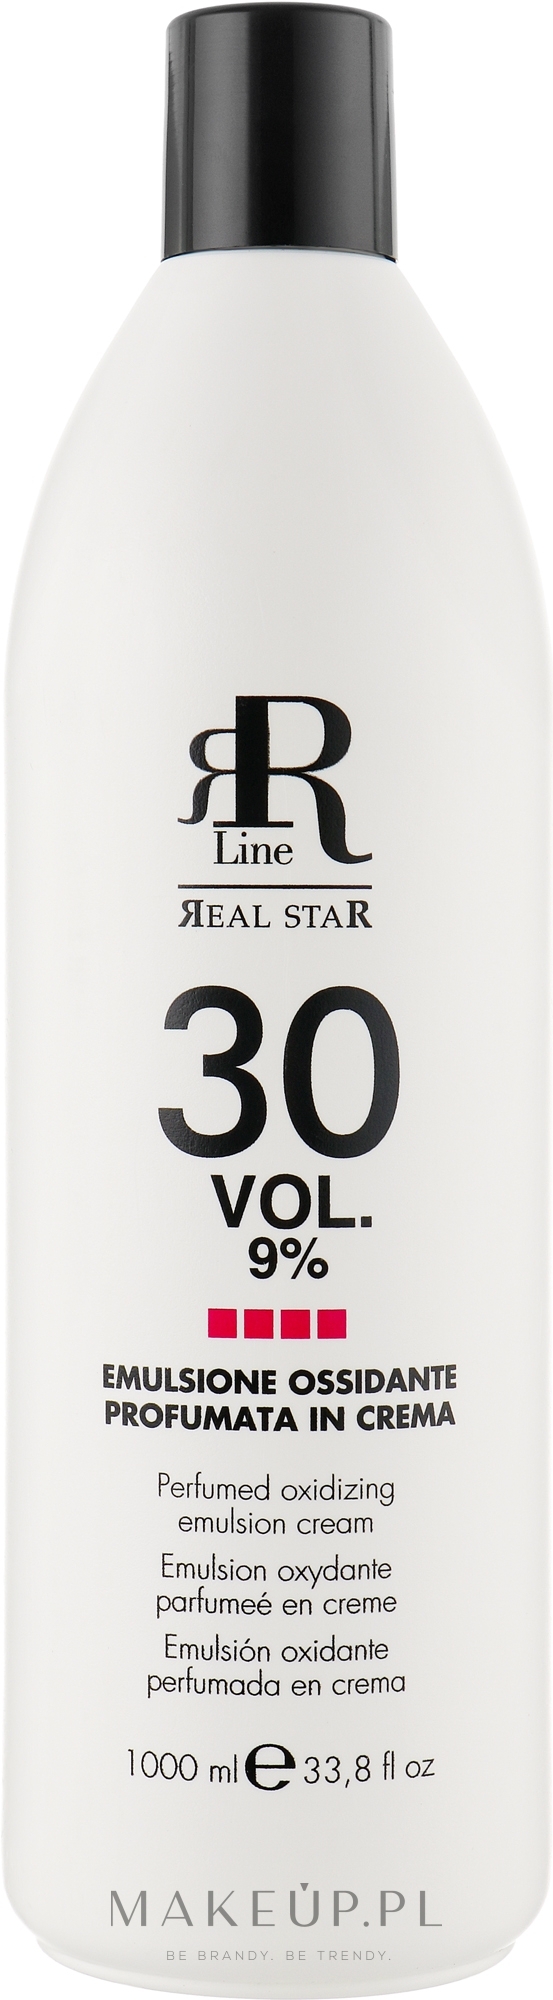 Perfumowana emulsja utleniająca 9% - RR Line Parfymed Ossidante Emulsione Cream 9% 30 Vol — Zdjęcie 1000 ml